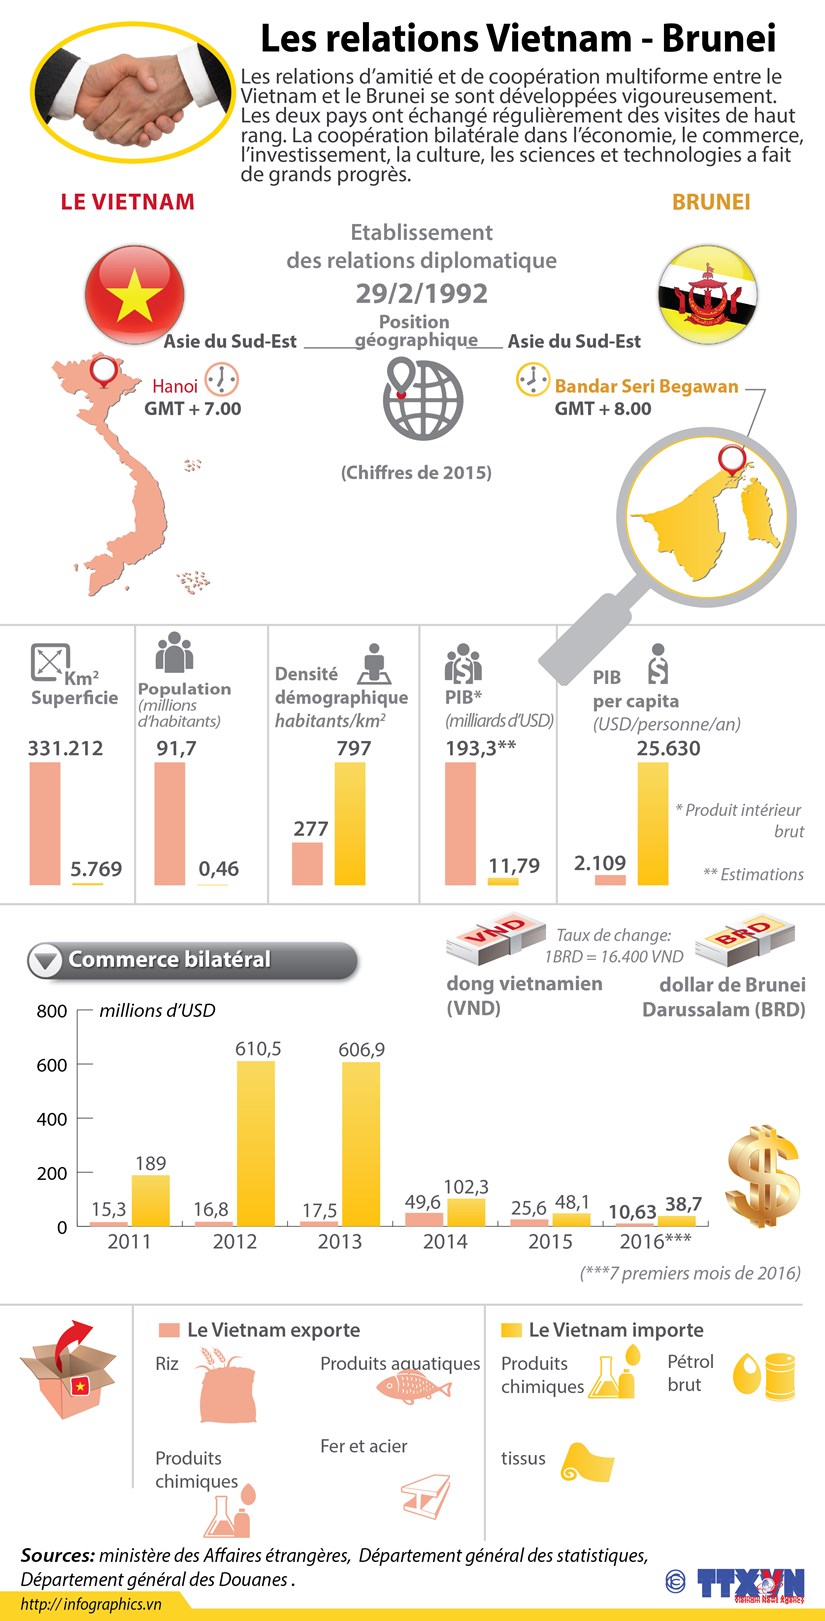 Les relations Vietnam - Brunei en infographie hinh anh 1